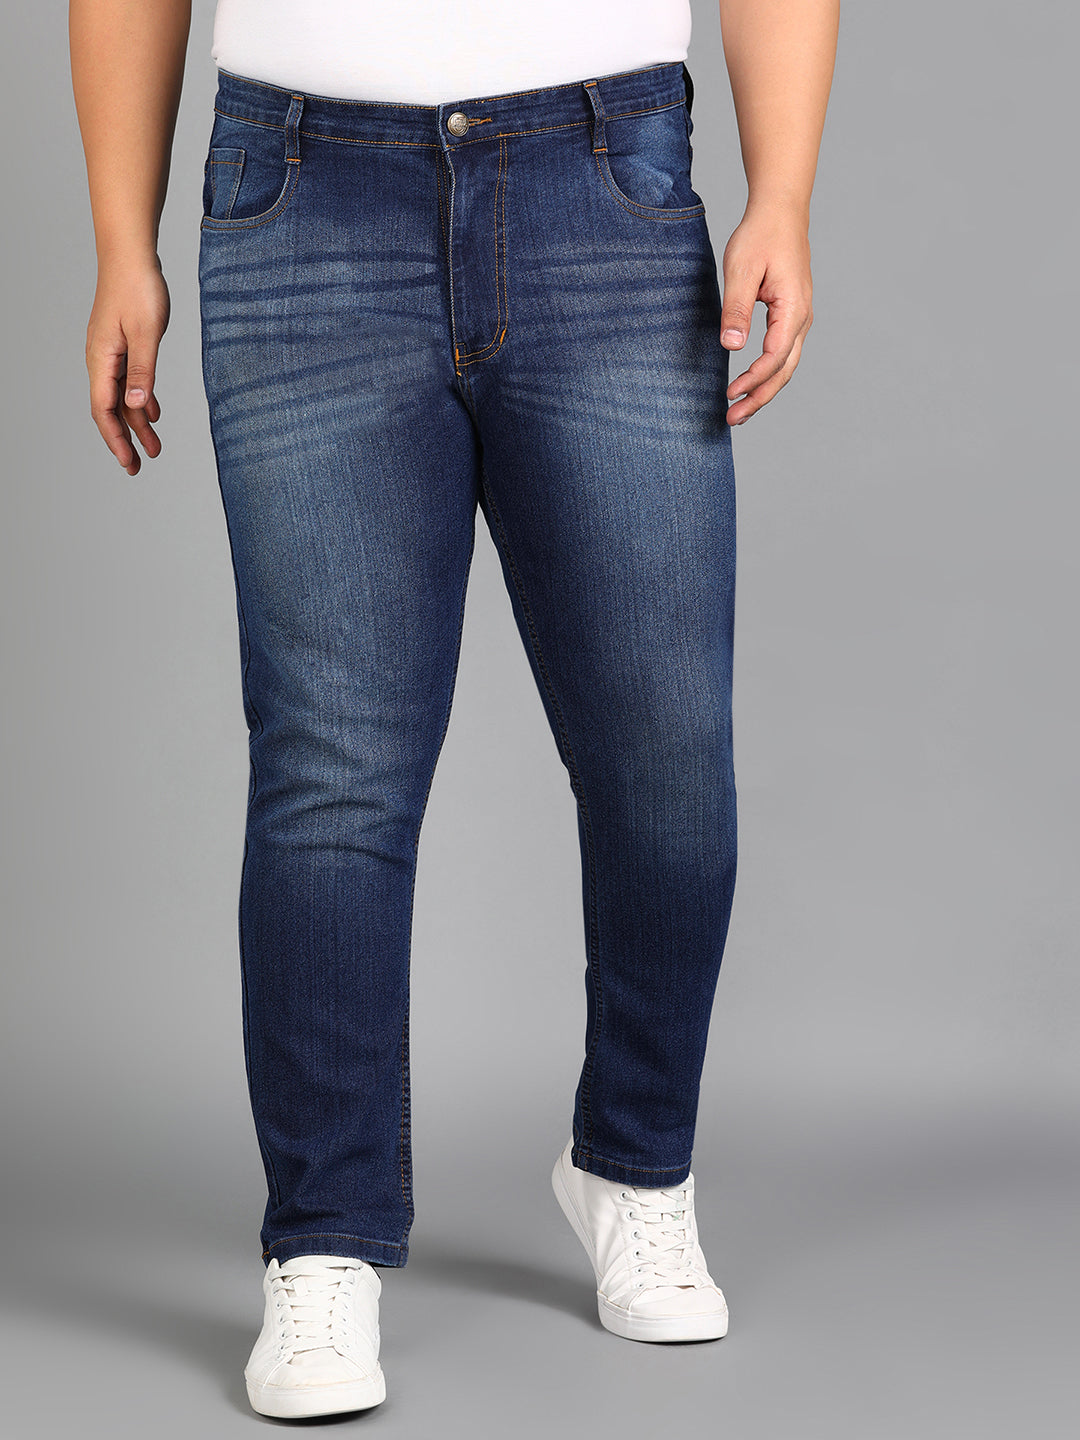 Urbano Plus Men's Blue Slim Fit Mild Distressed/Torn Jeans Stretchable